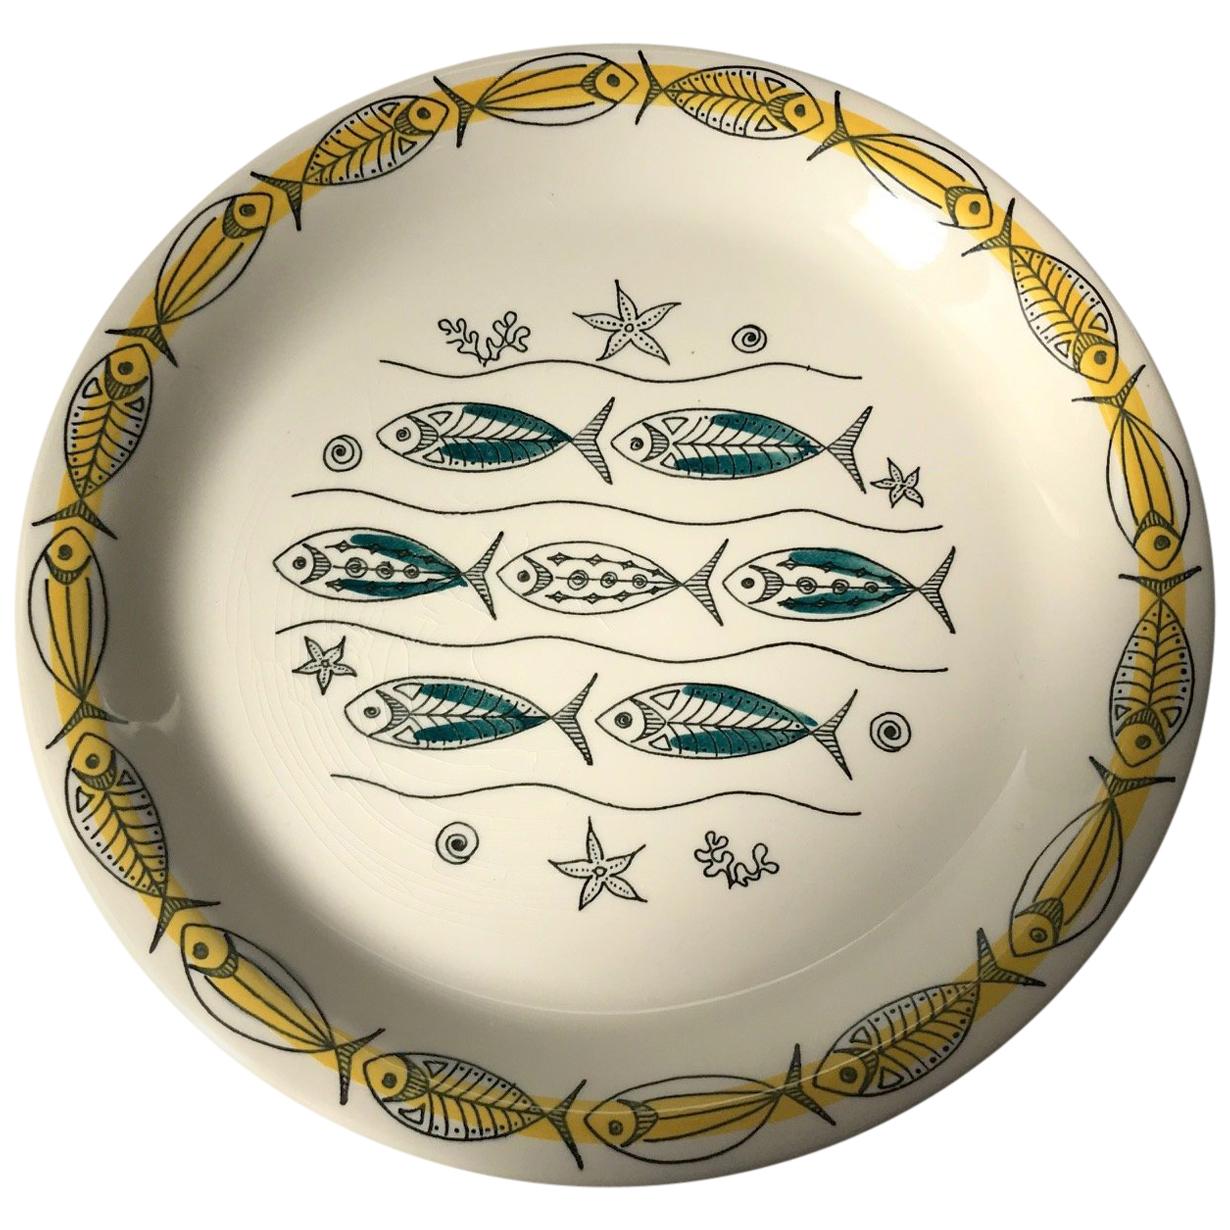 Set of Midcentury Ceramic Fish Plates by Inger Waage for Stavangerflint, 1950s